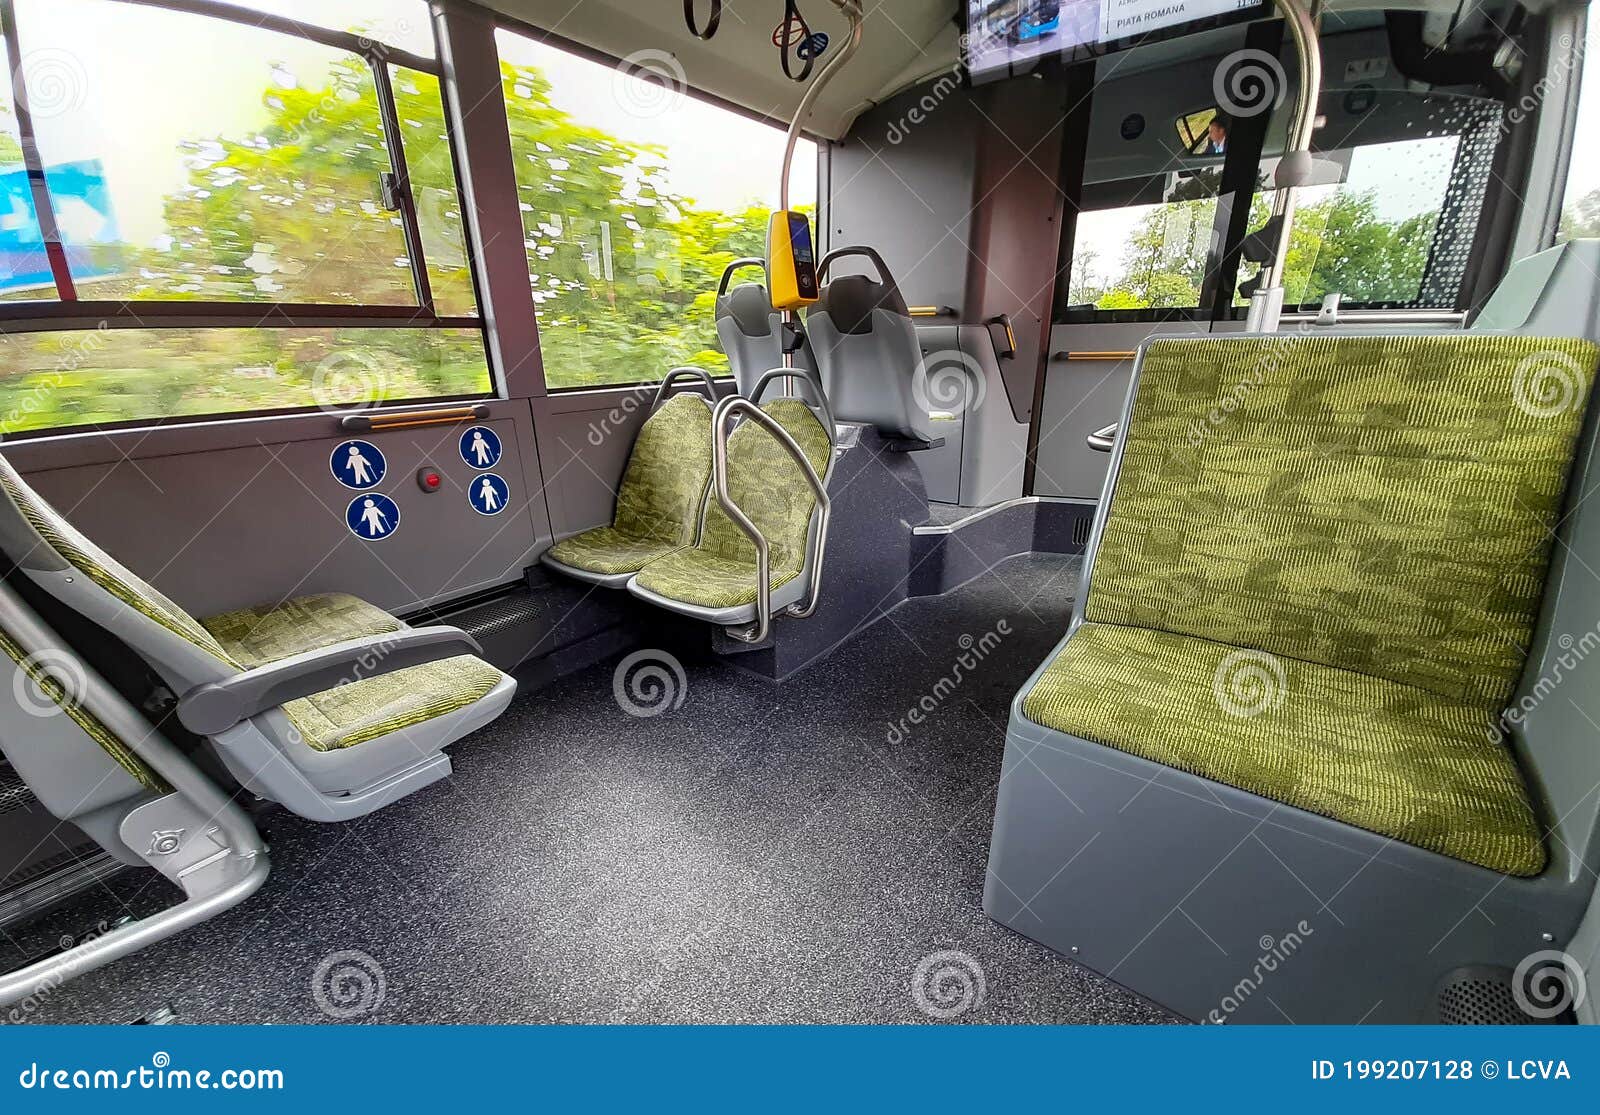 zeemijl Feodaal kas Mercedes Citaro Hybrid bus editorial stock photo. Image of citaro -  199207128